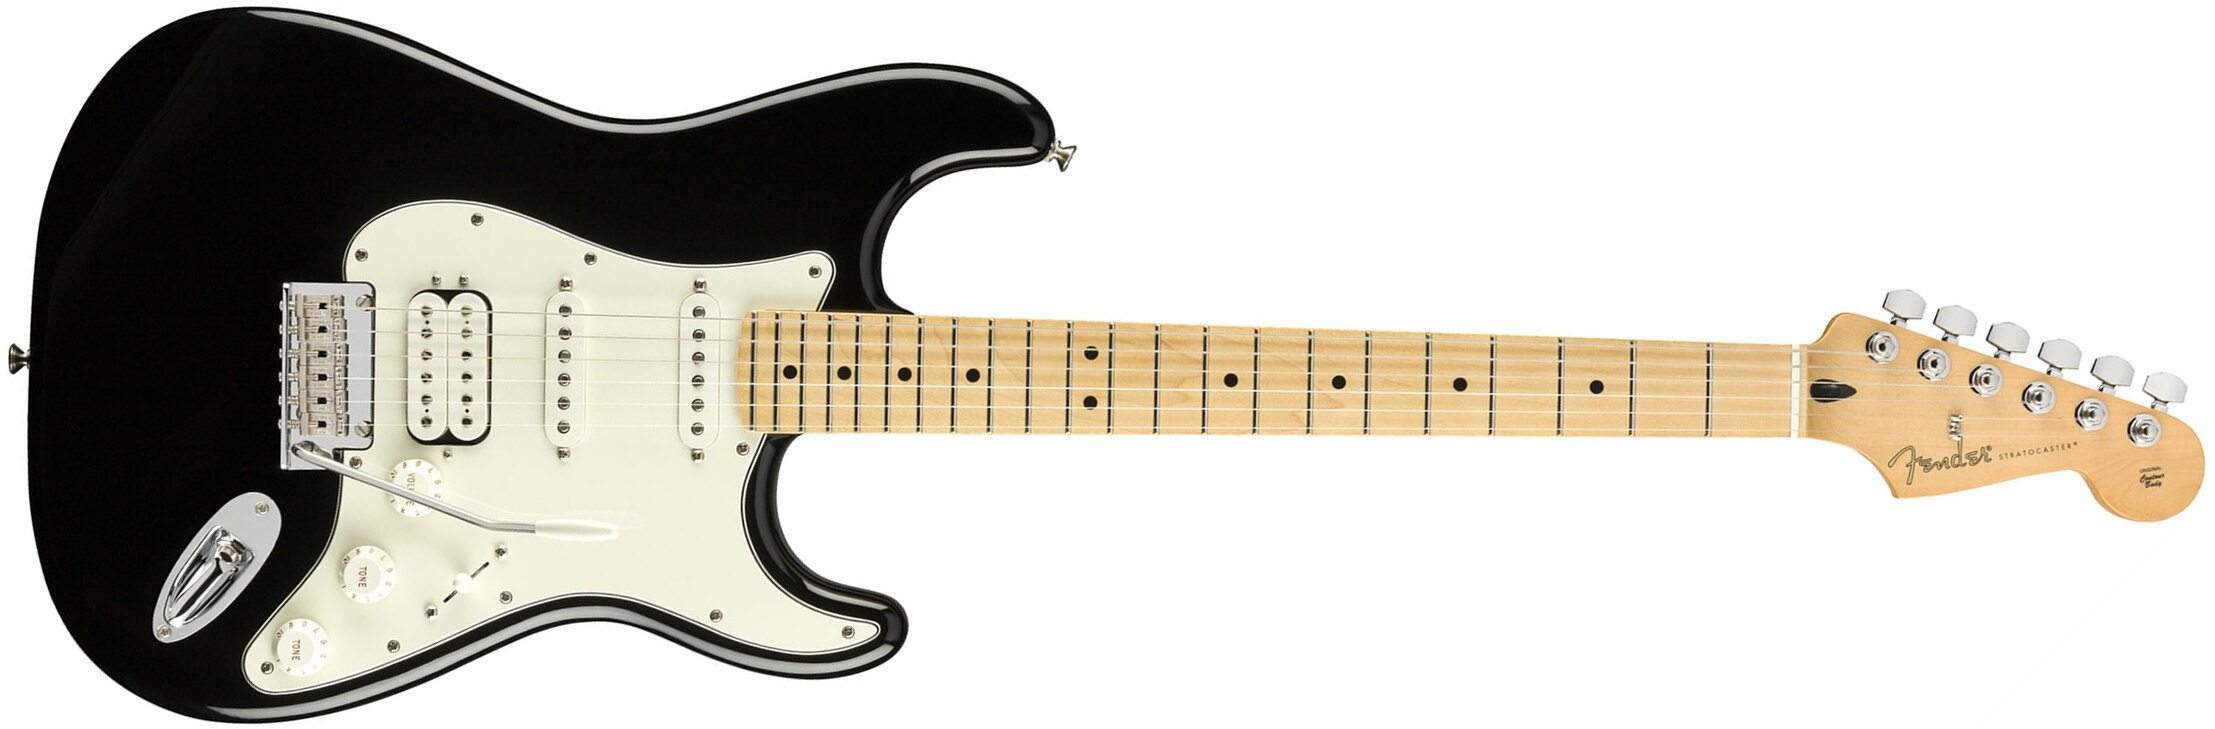 Fender Strat Player Mex Hss Mn - Black - Str shape electric guitar - Main picture